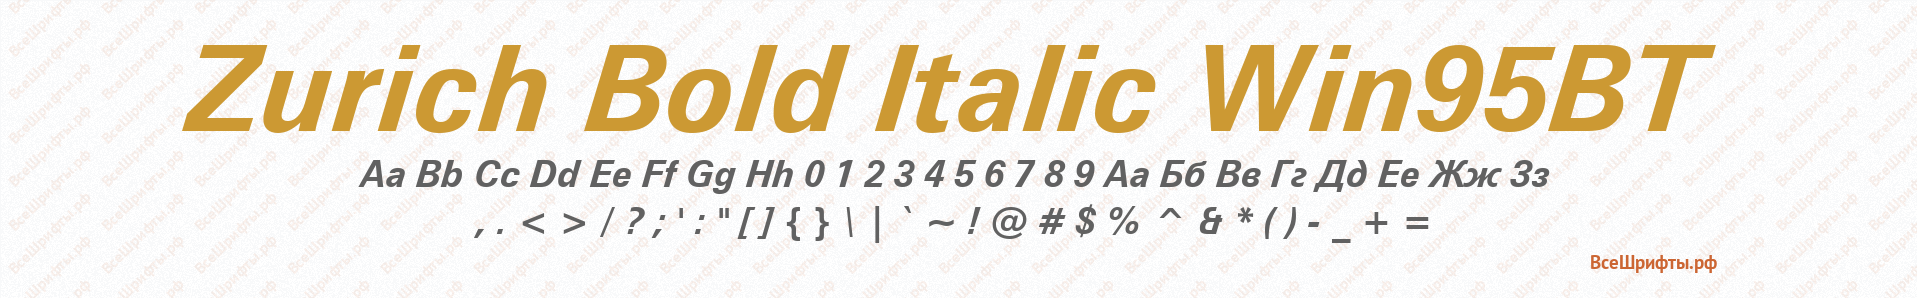 Шрифт Zurich Bold Italic Win95BT